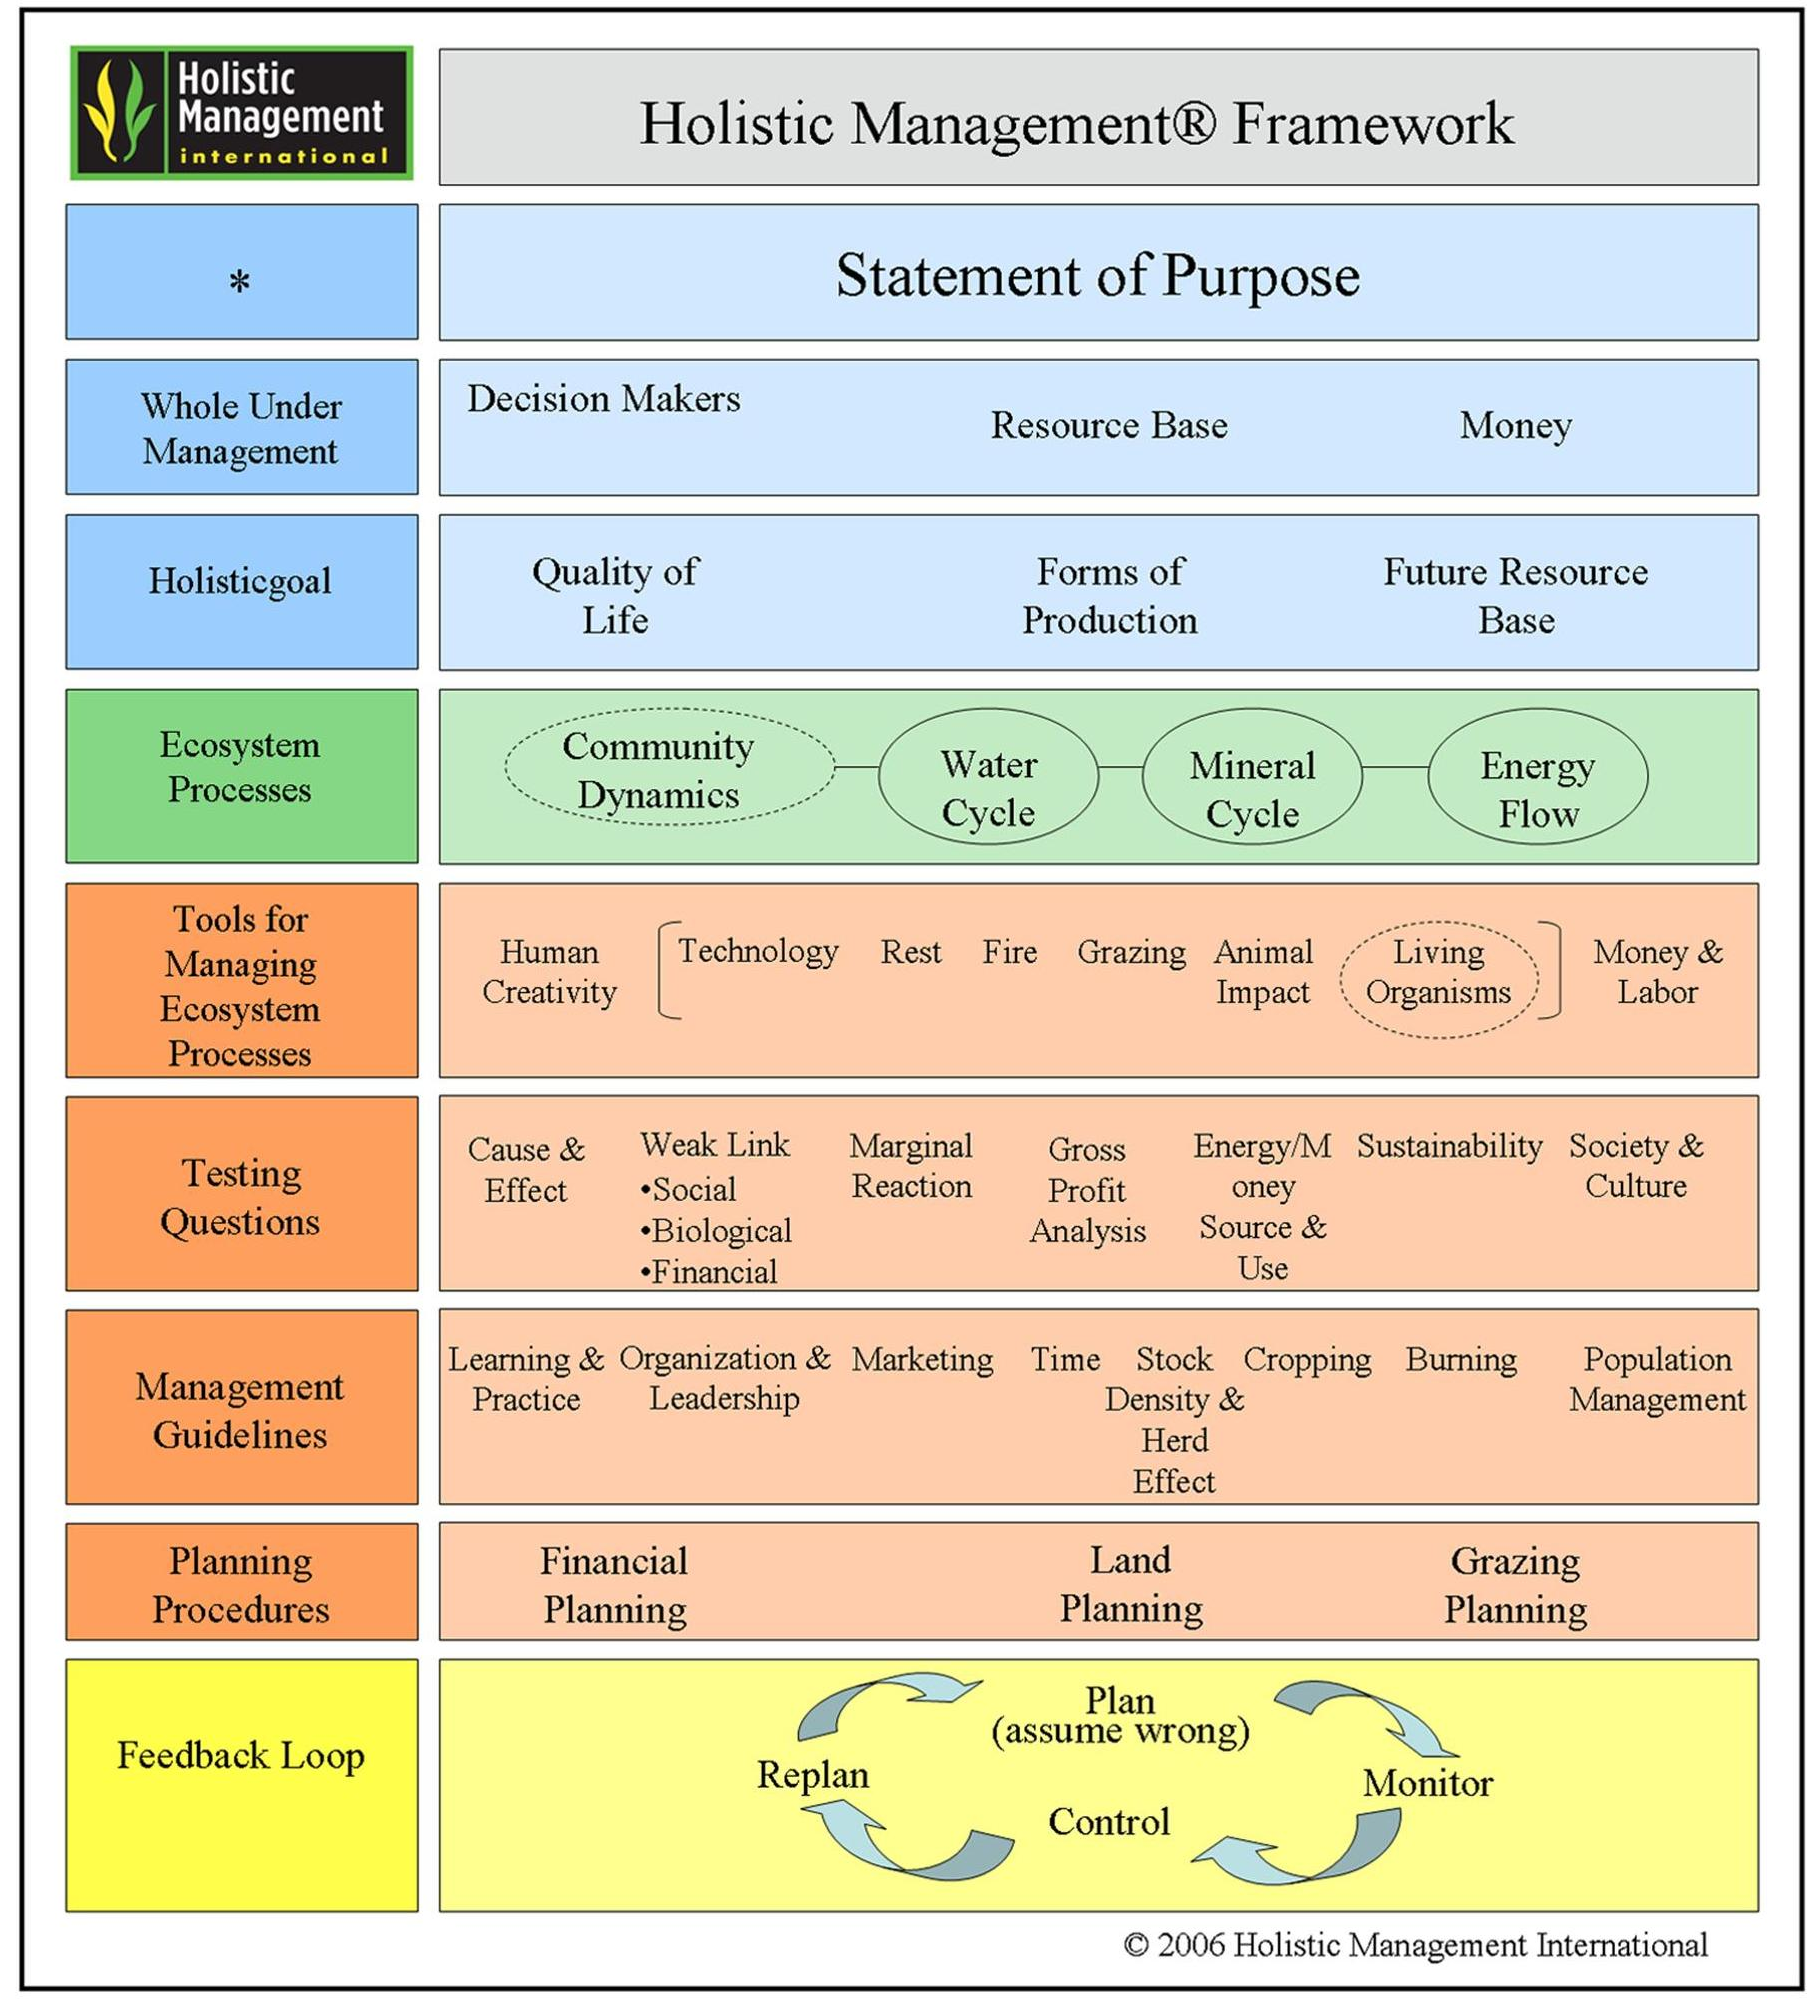 HM_Framework